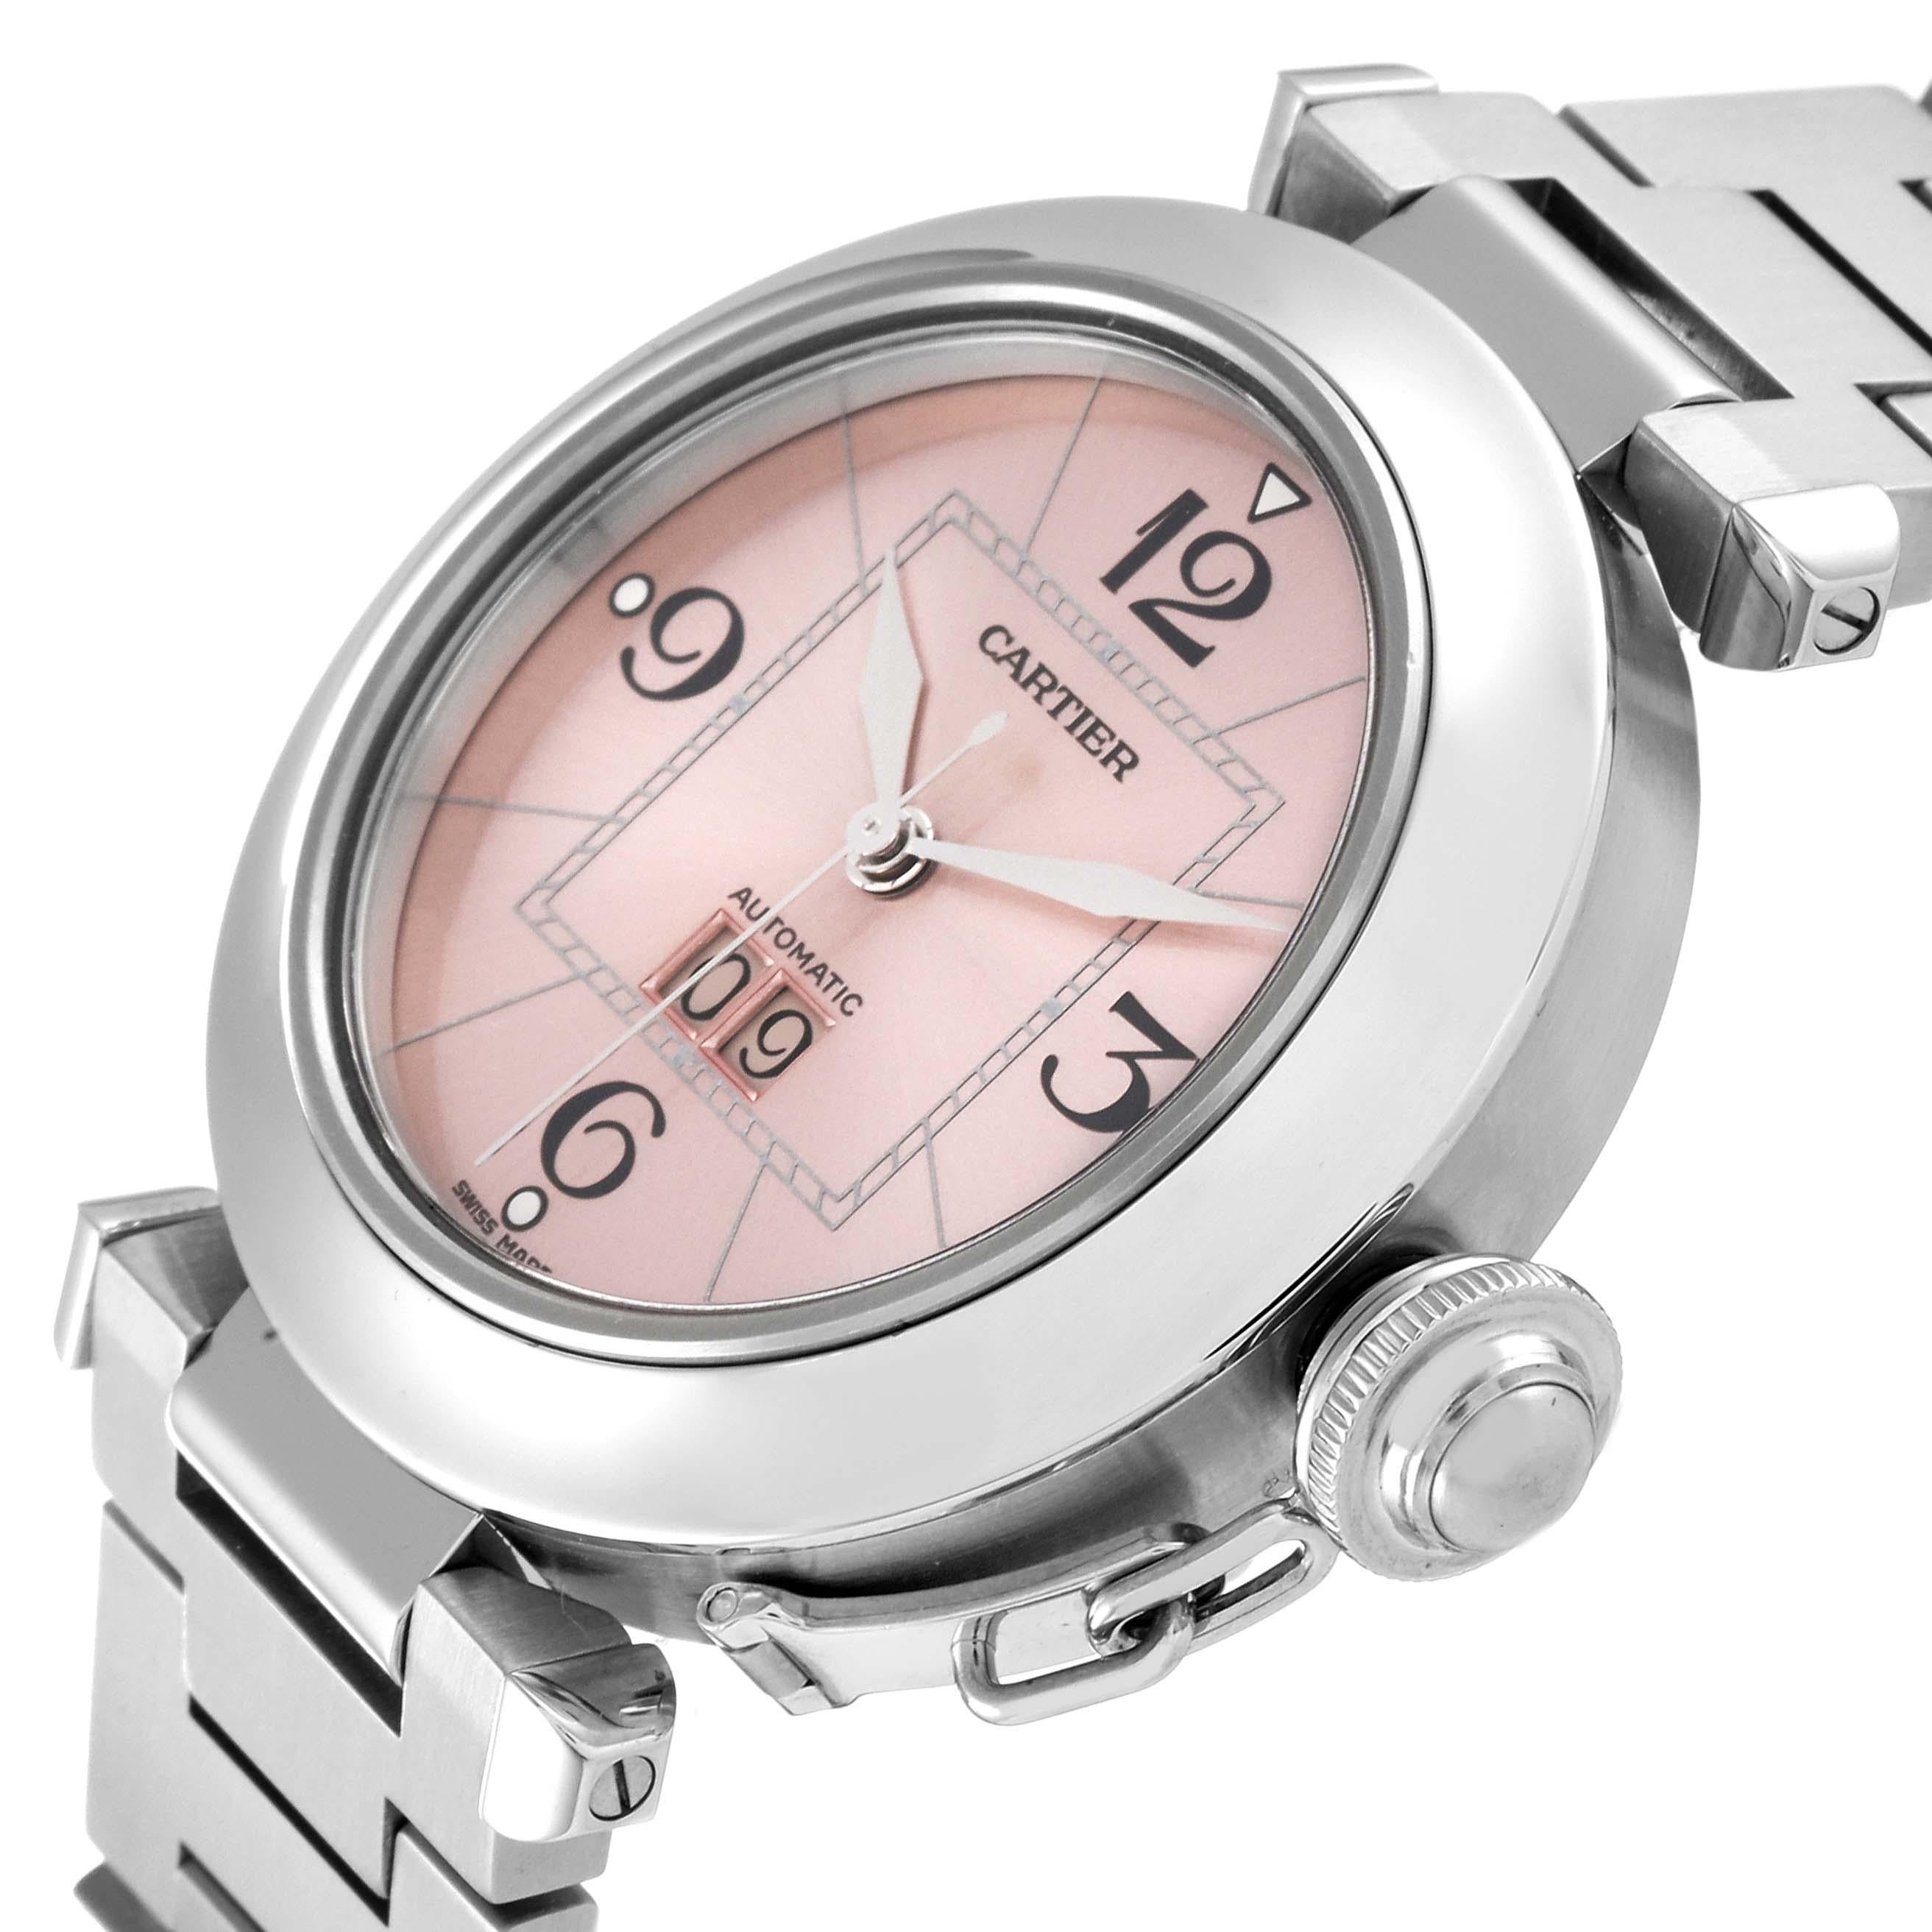 Cartier Pasha Big Date Pink Dial Steel Ladies Watch W31058M7 1